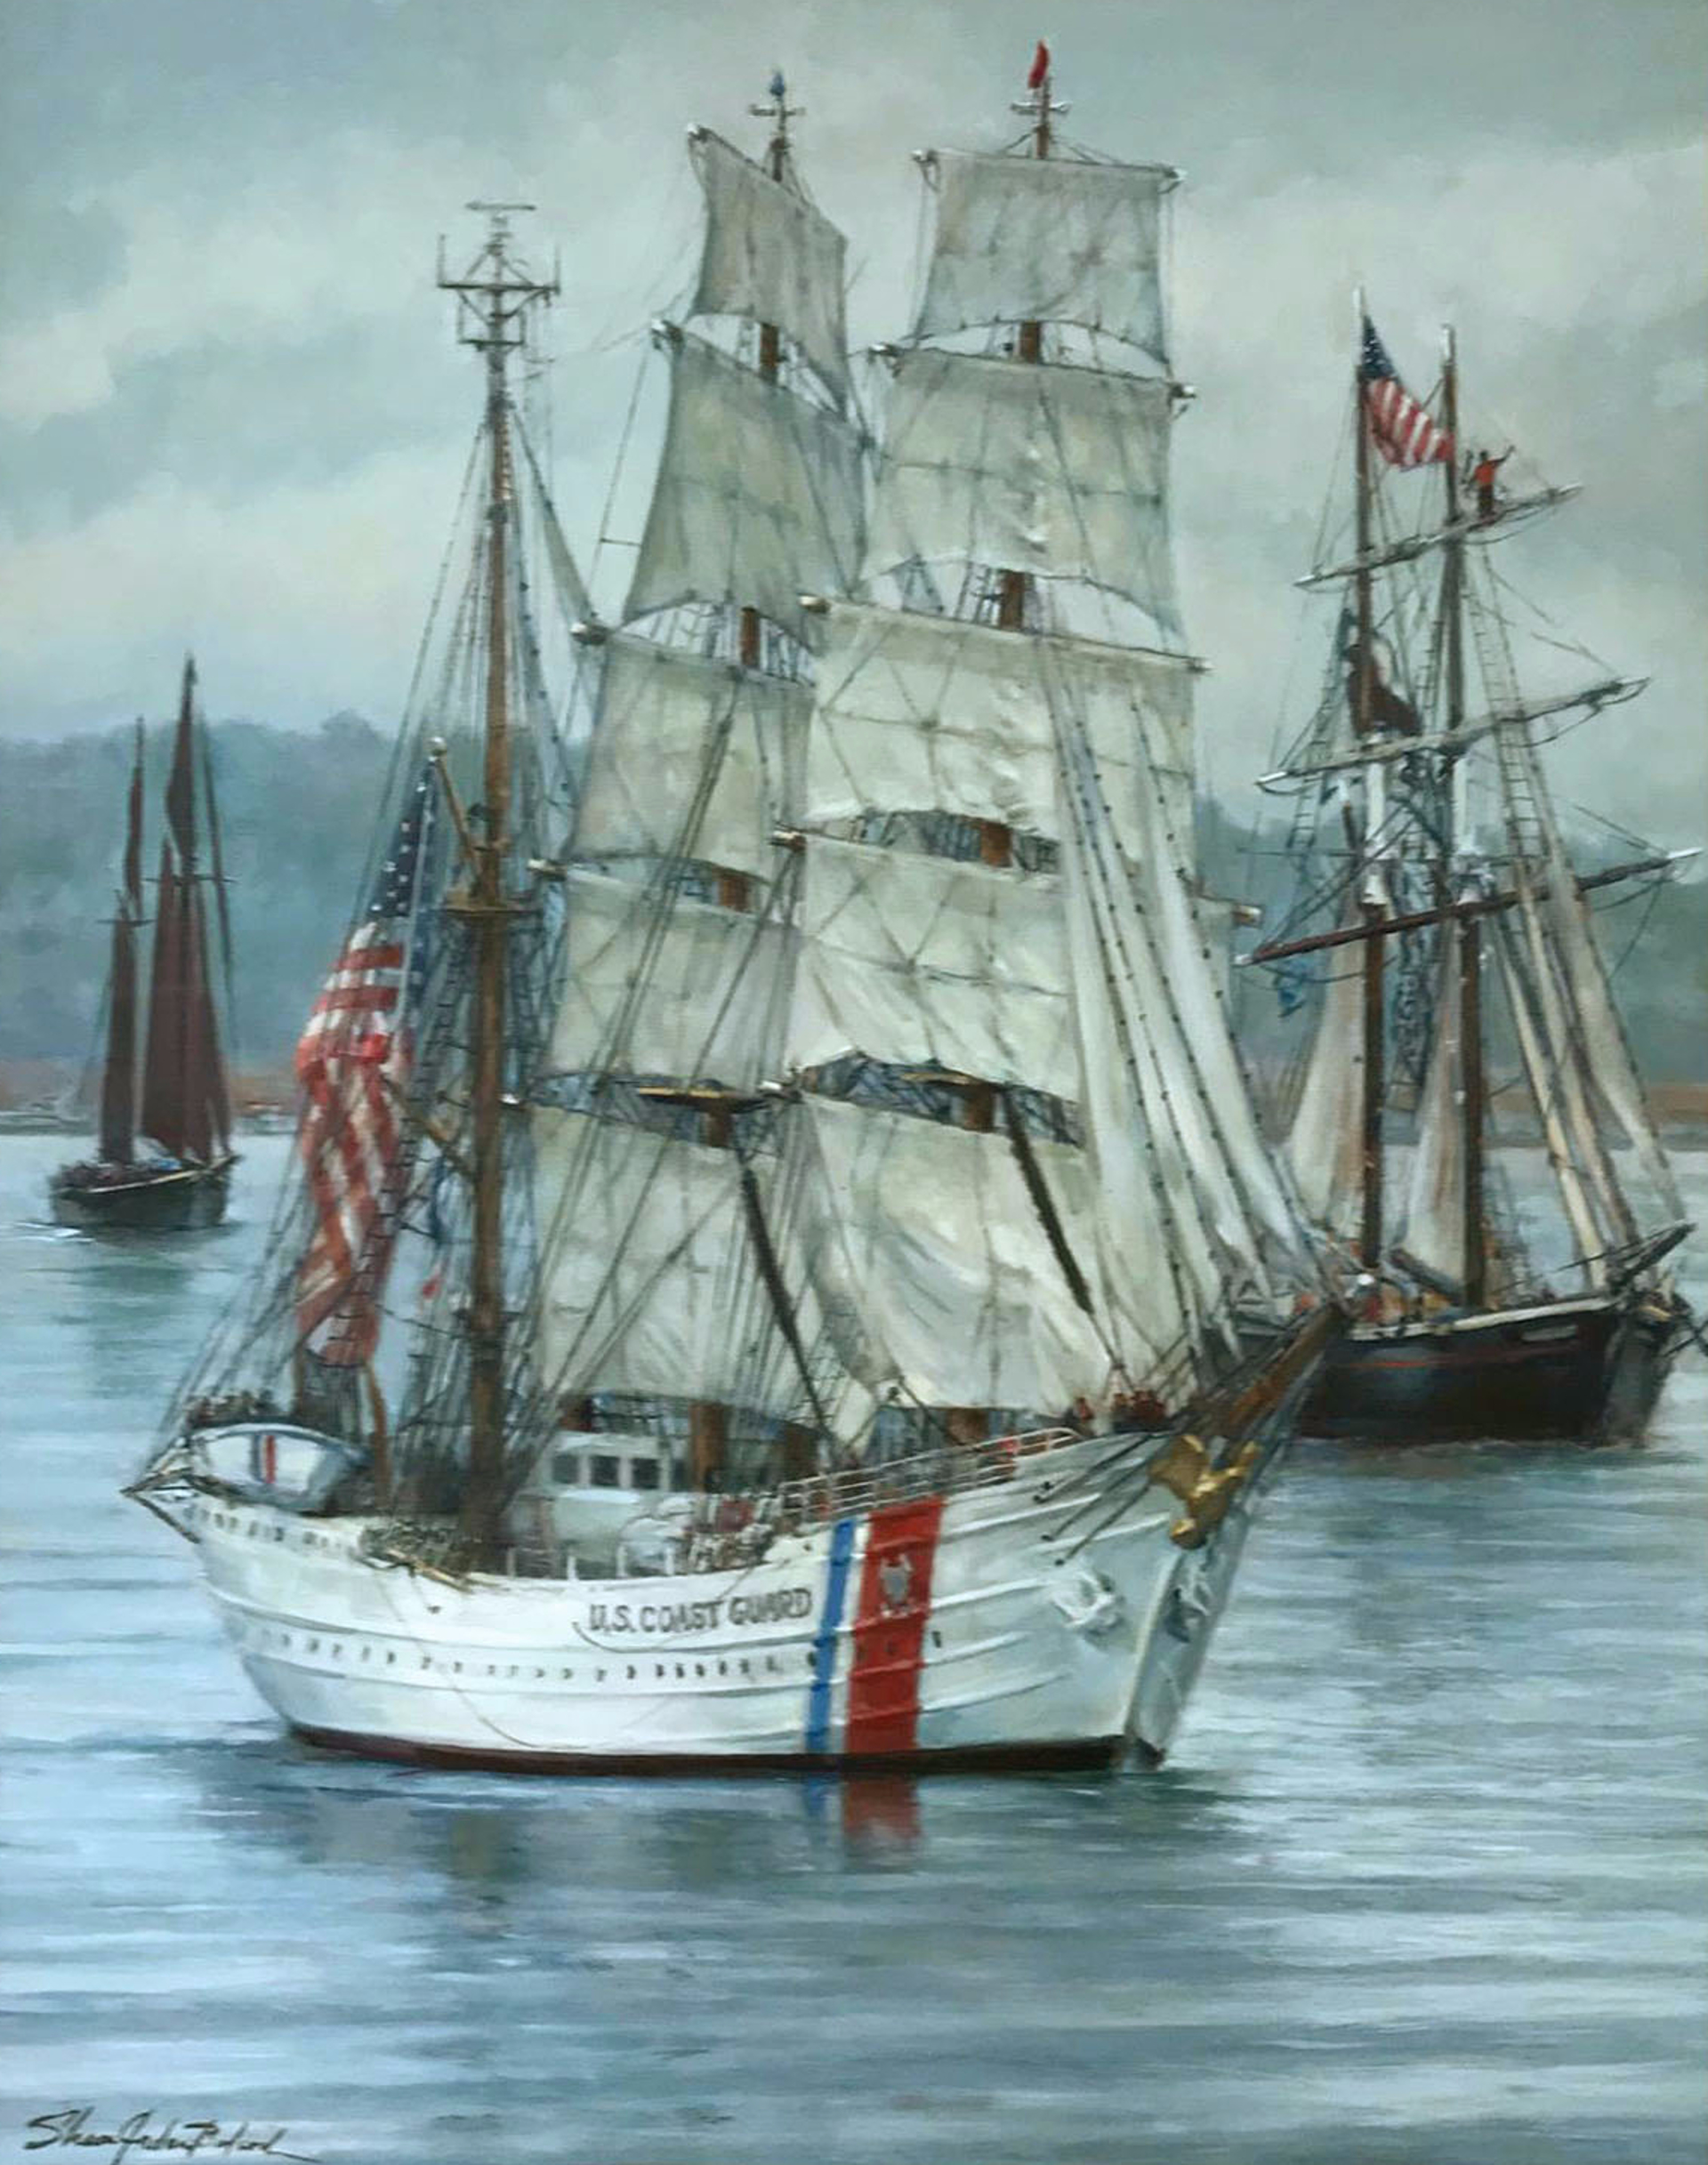 Ushering in Sail Boston 2017 is U.S. Coast Guard, The Eagle by Sharon Bahosh